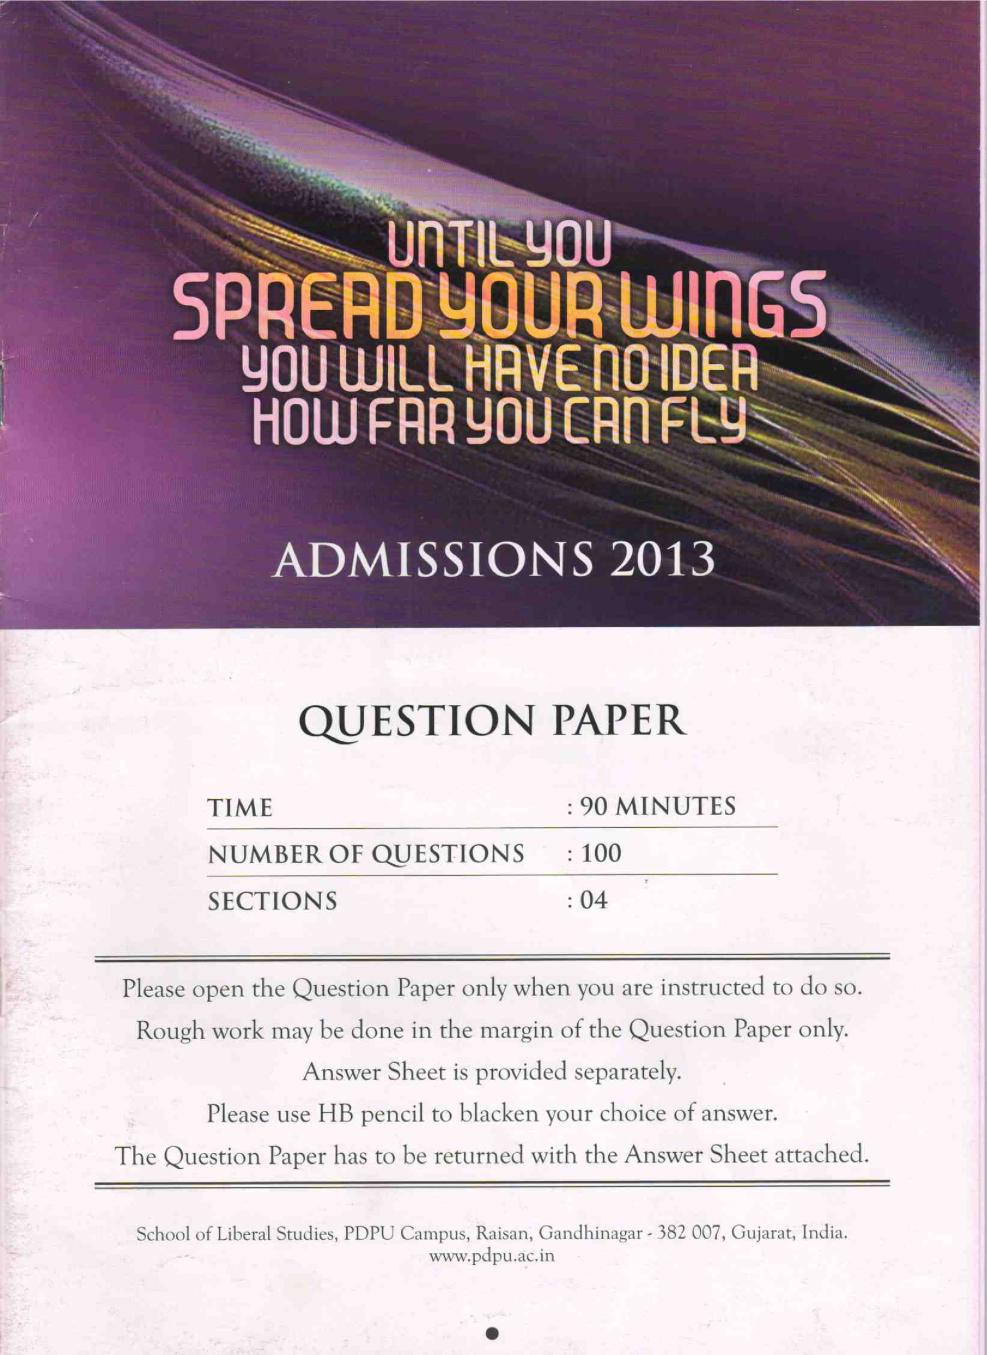 PDPU SLS Question Paper 2013 - Page 1